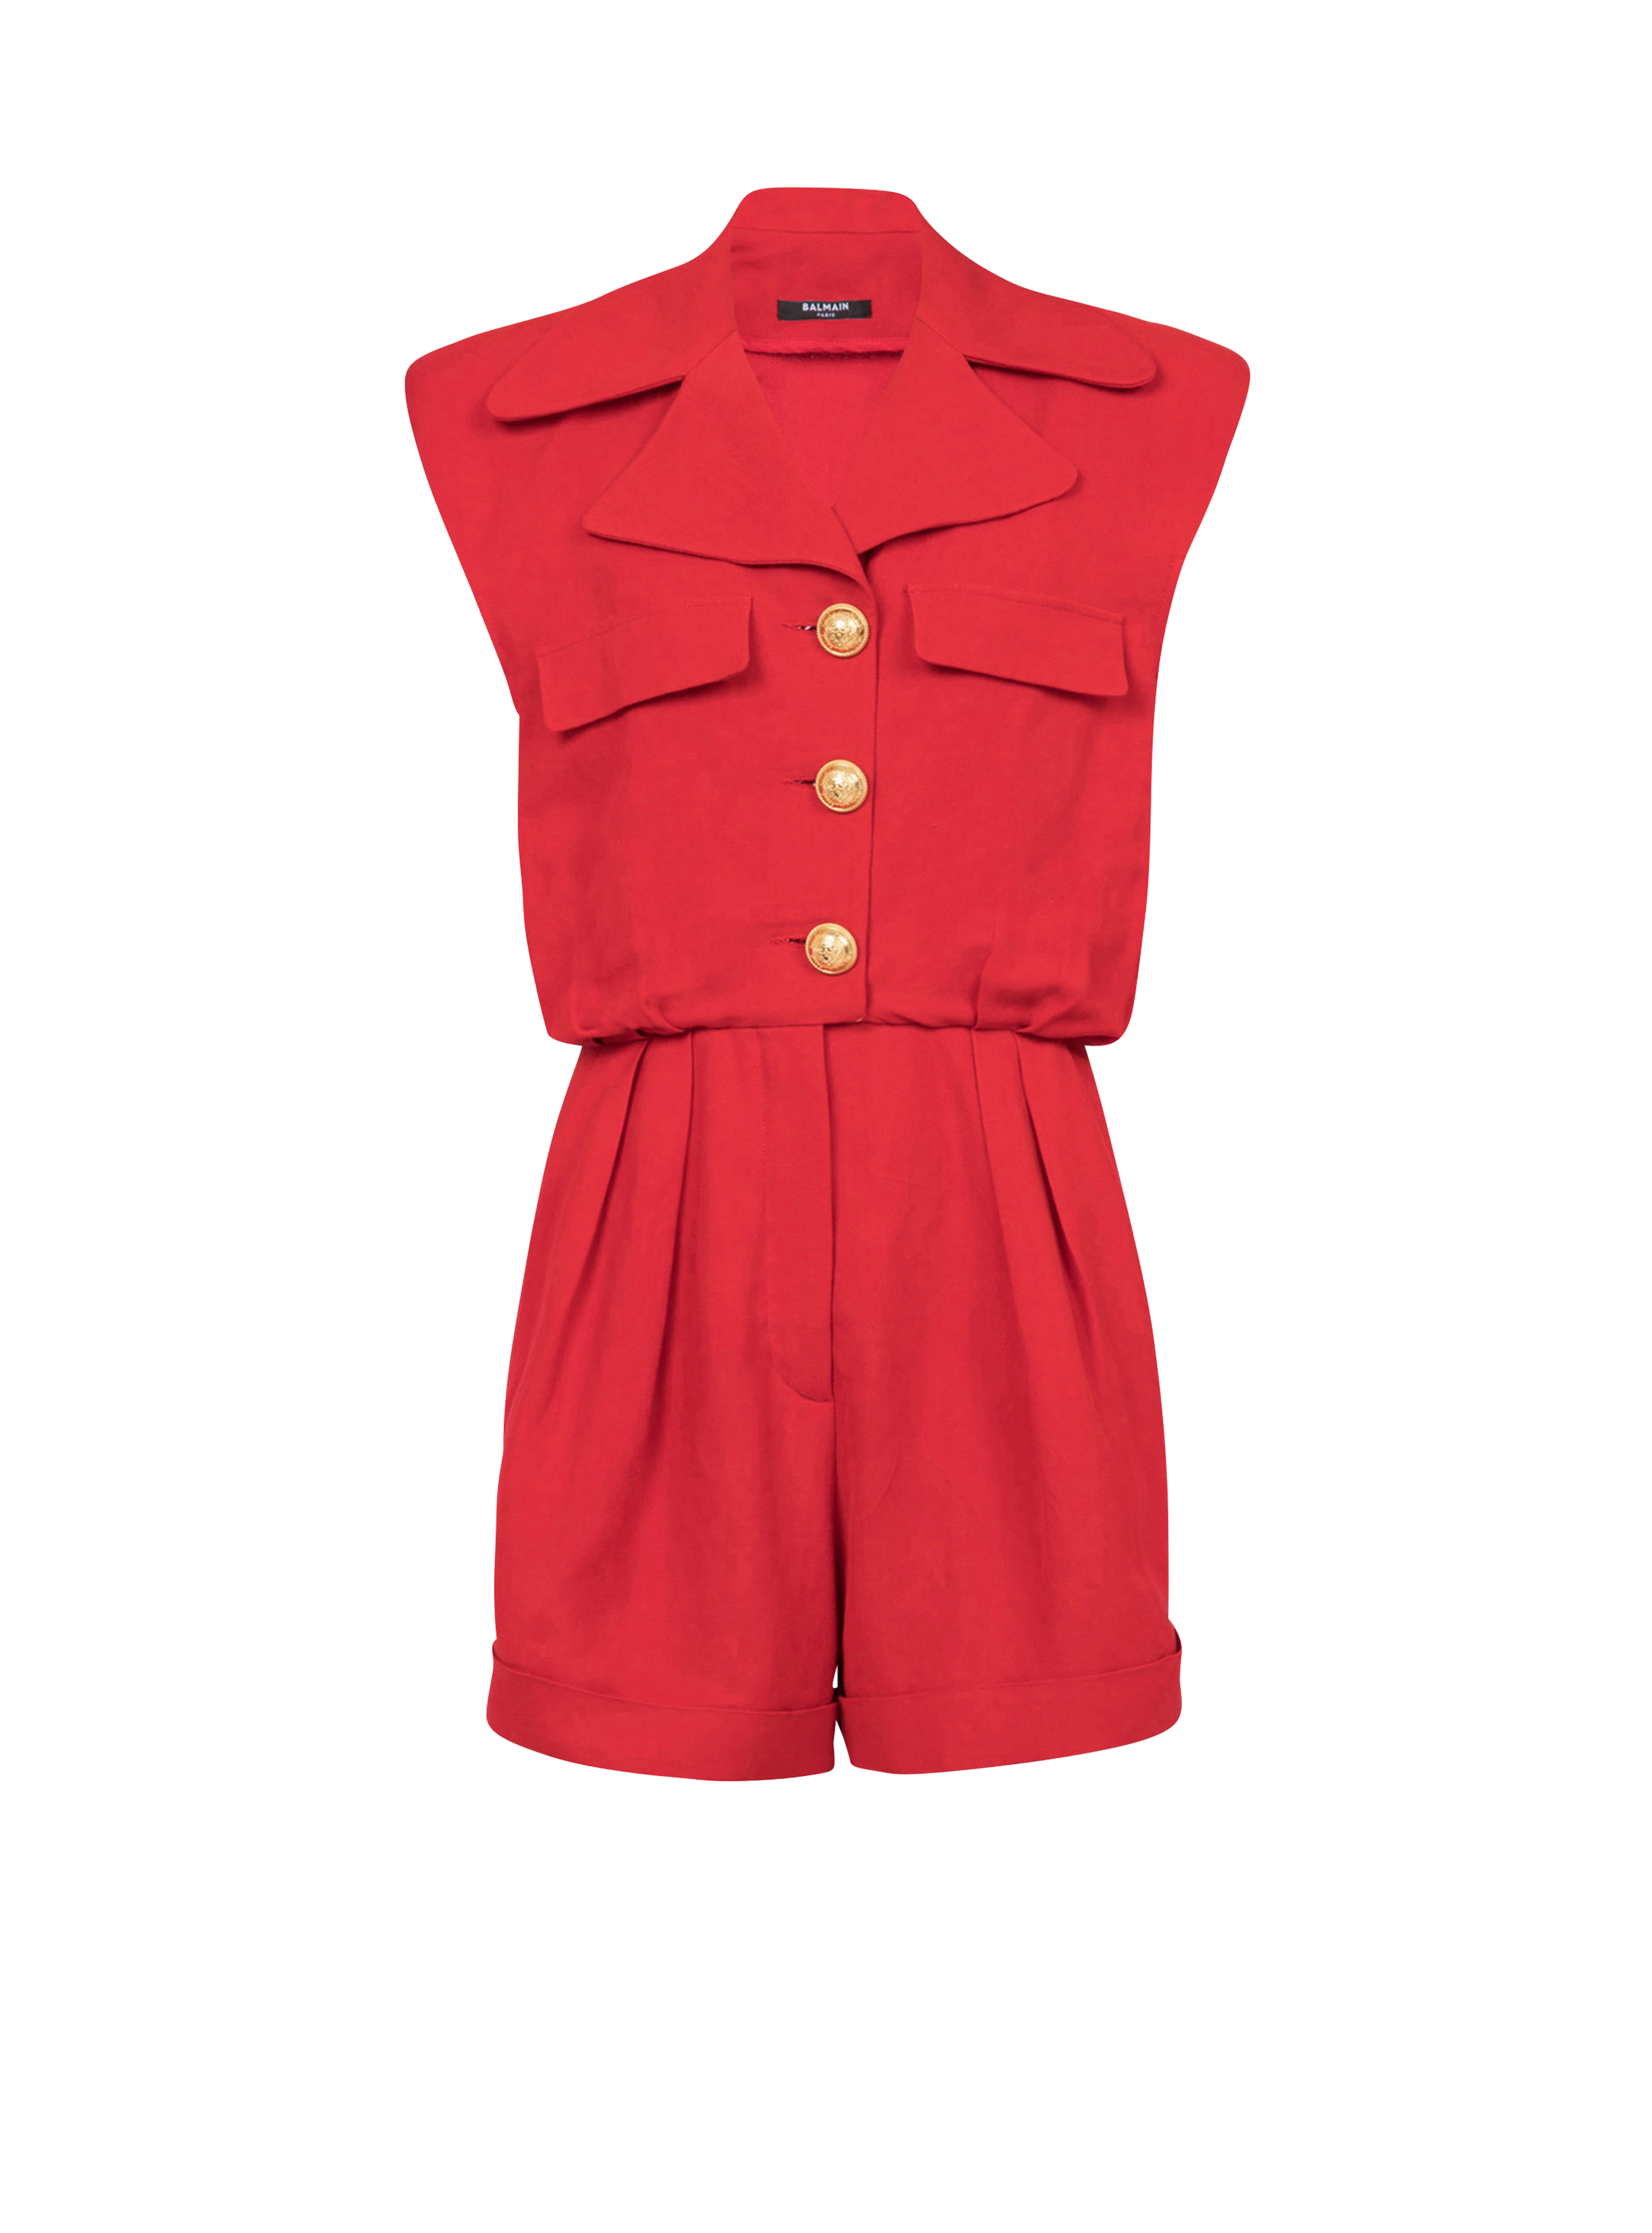 High summer capsule - Short jumpsuit, red